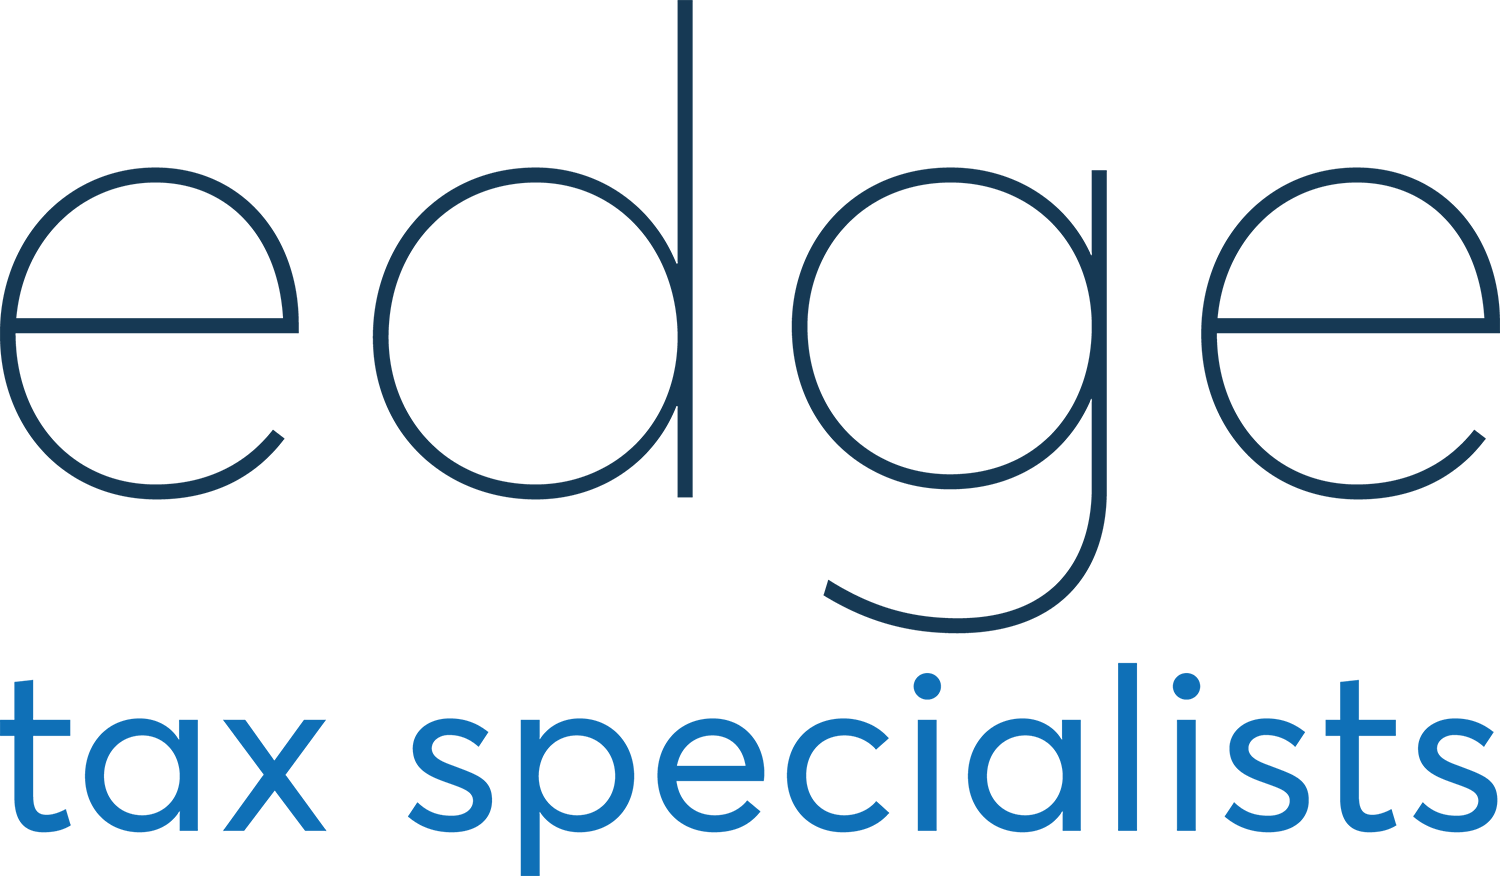 YCDT sponsor, Edge Tax